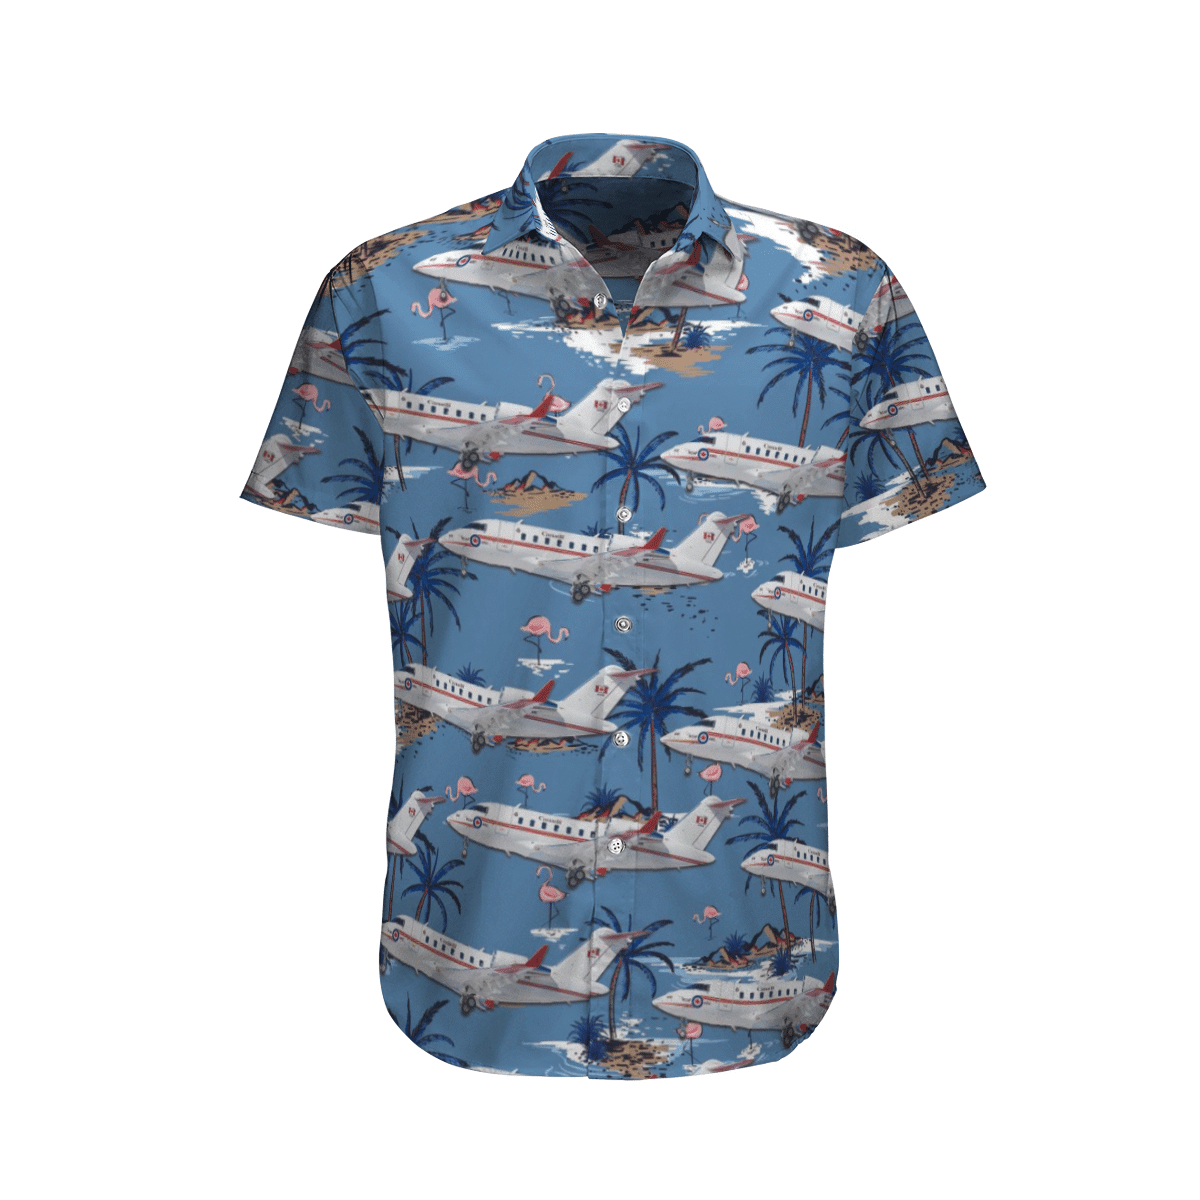 Get a new Hawaiian shirt to enjoy summer vacation 140